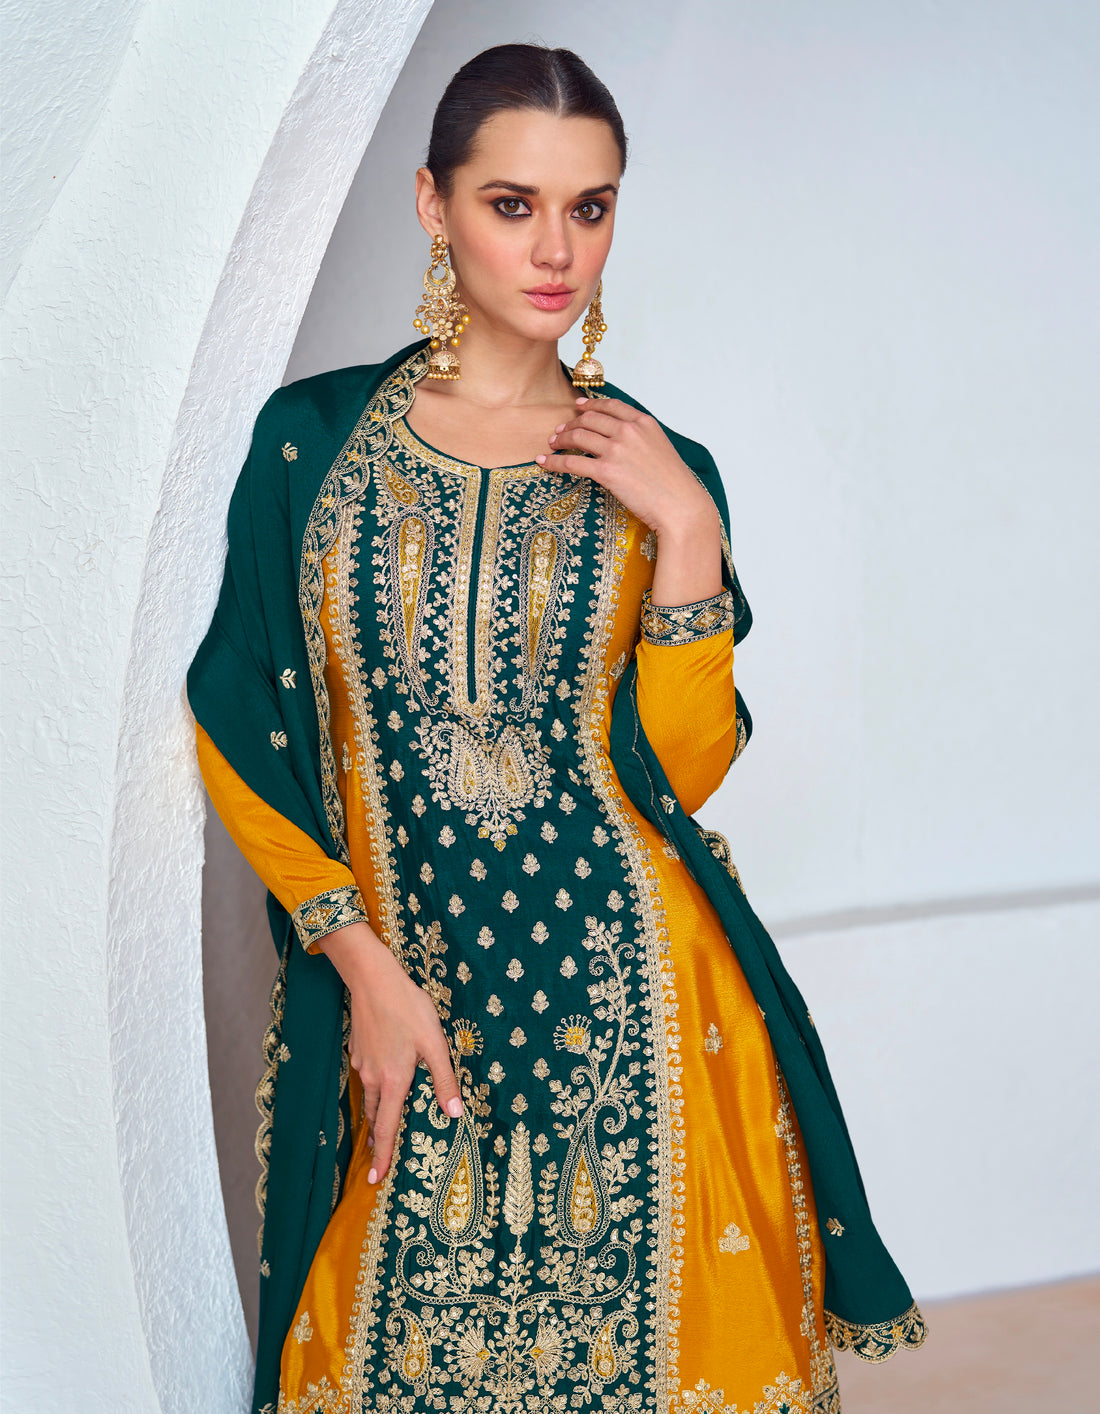 Designer Occasion Wear Latest Anarkali Style Salwar Suit